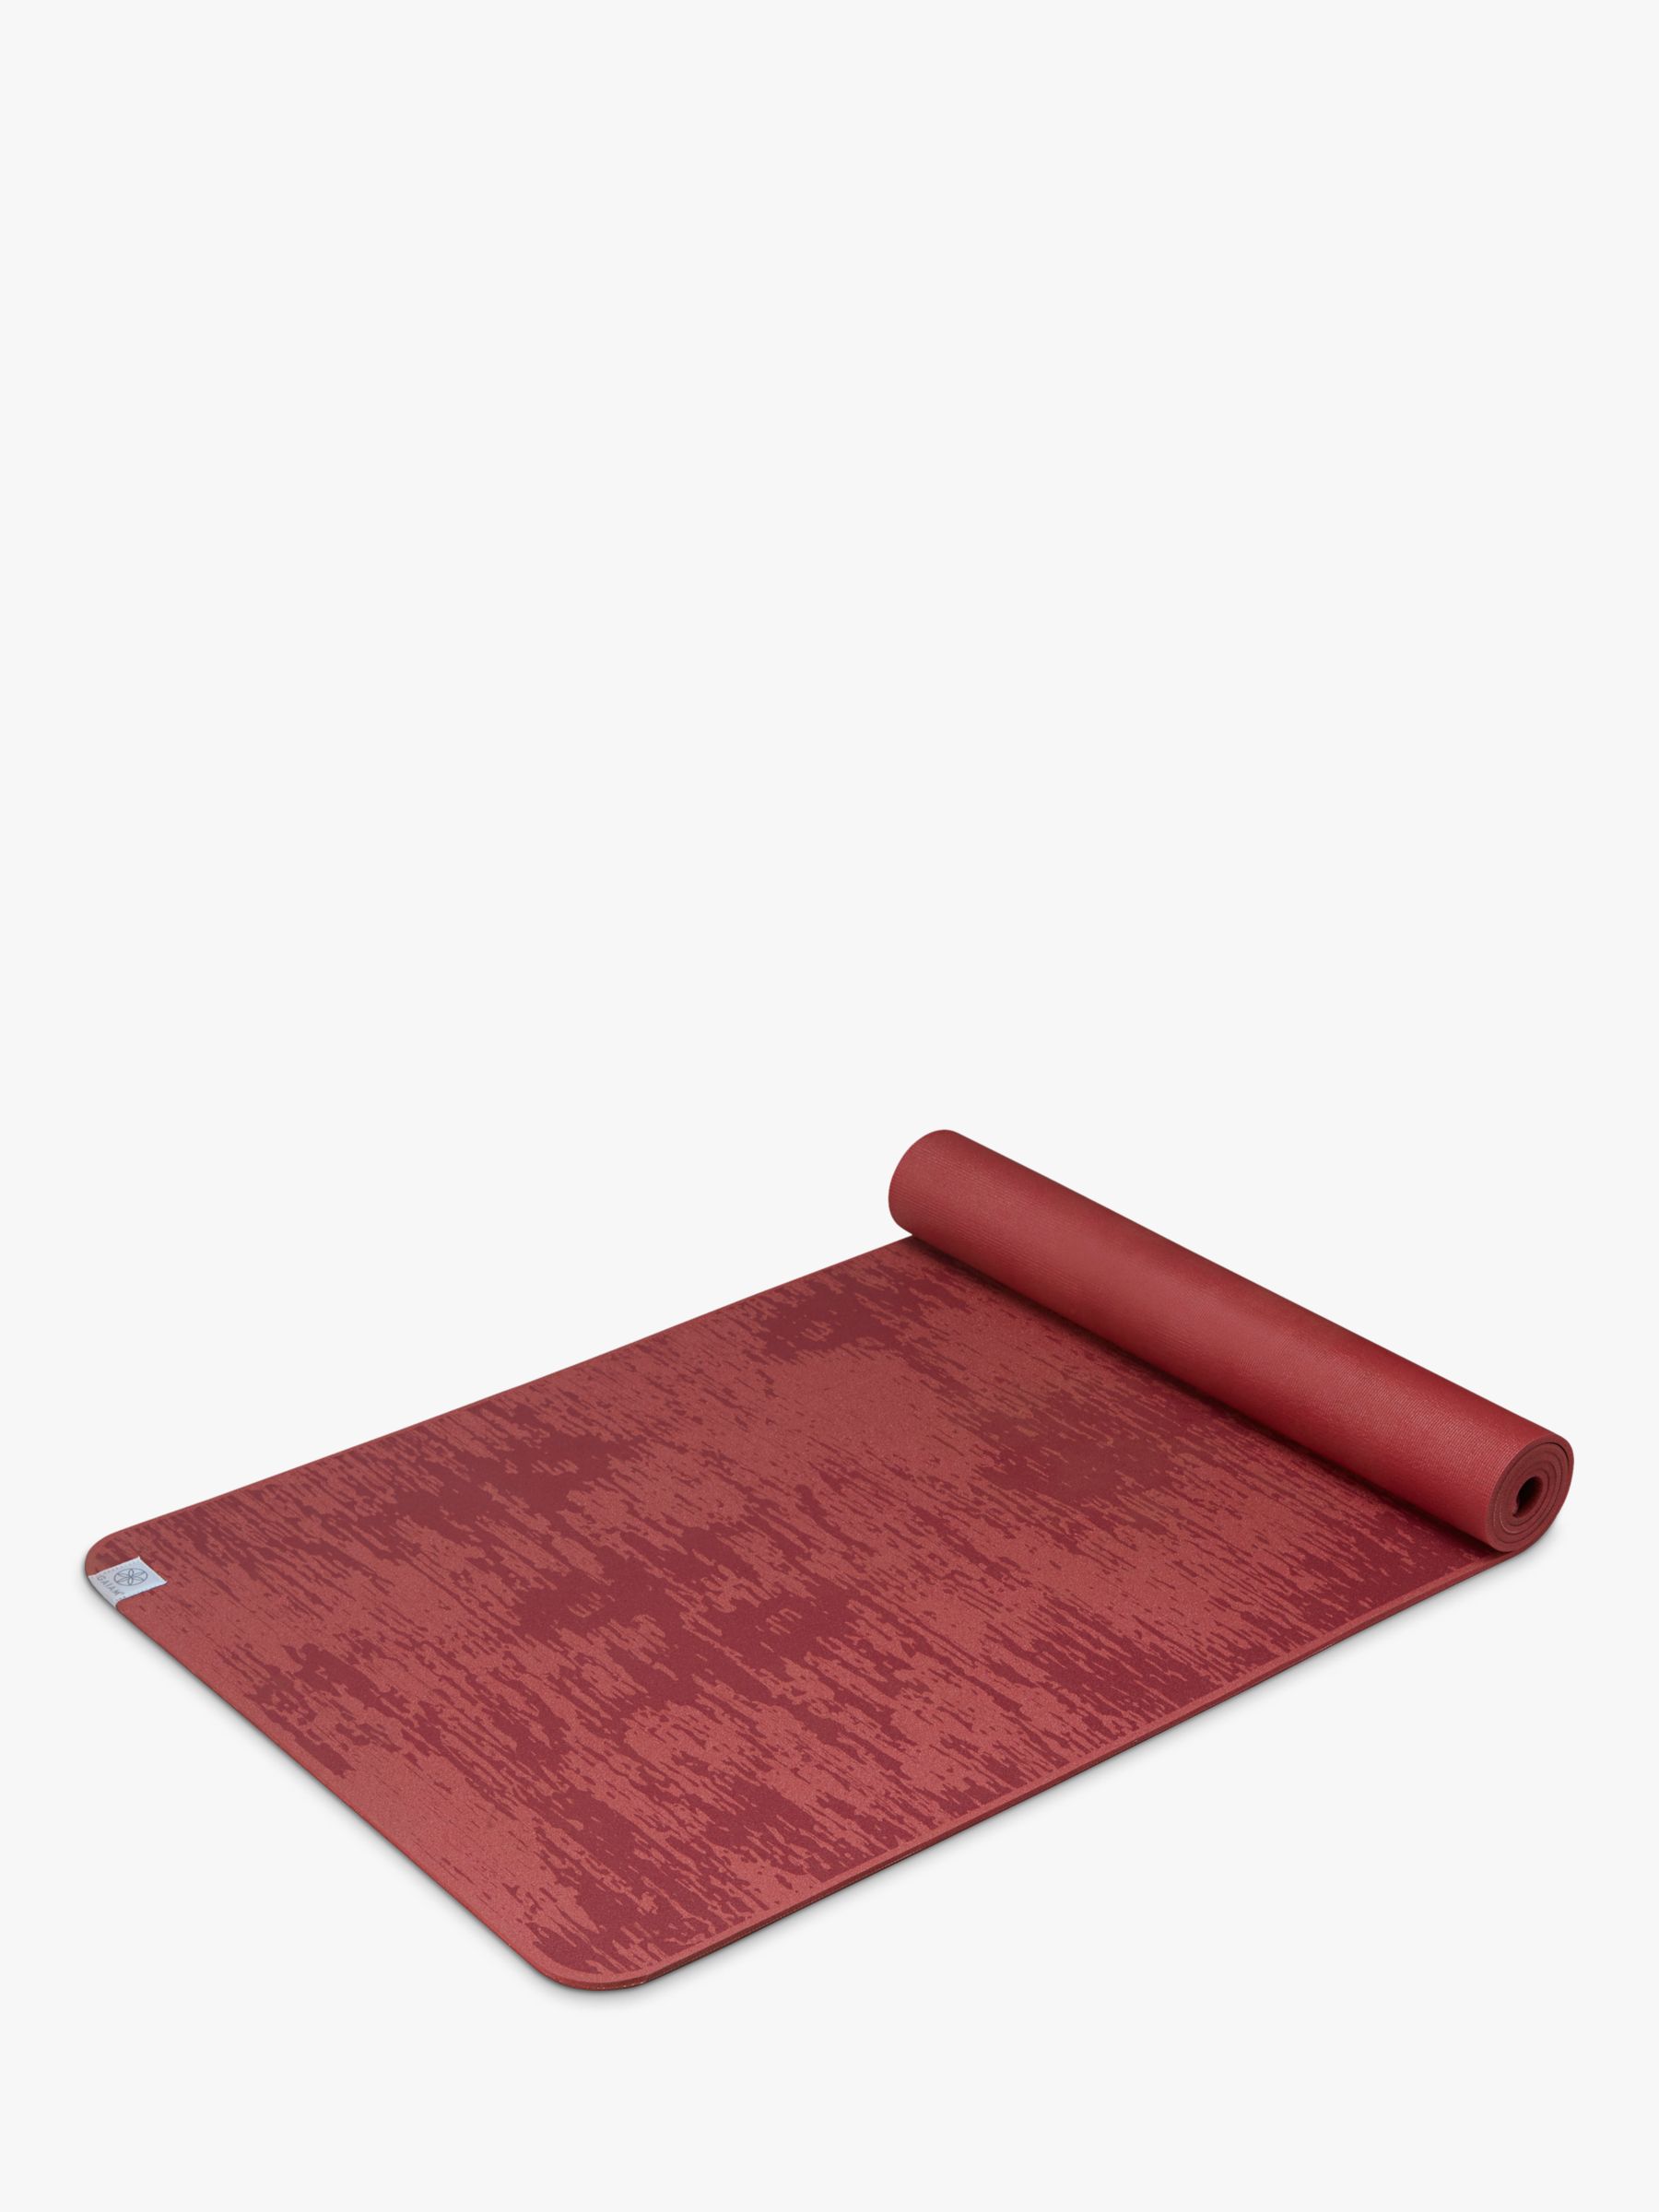 Performance Cork Yoga Mat (5mm) - Gaiam